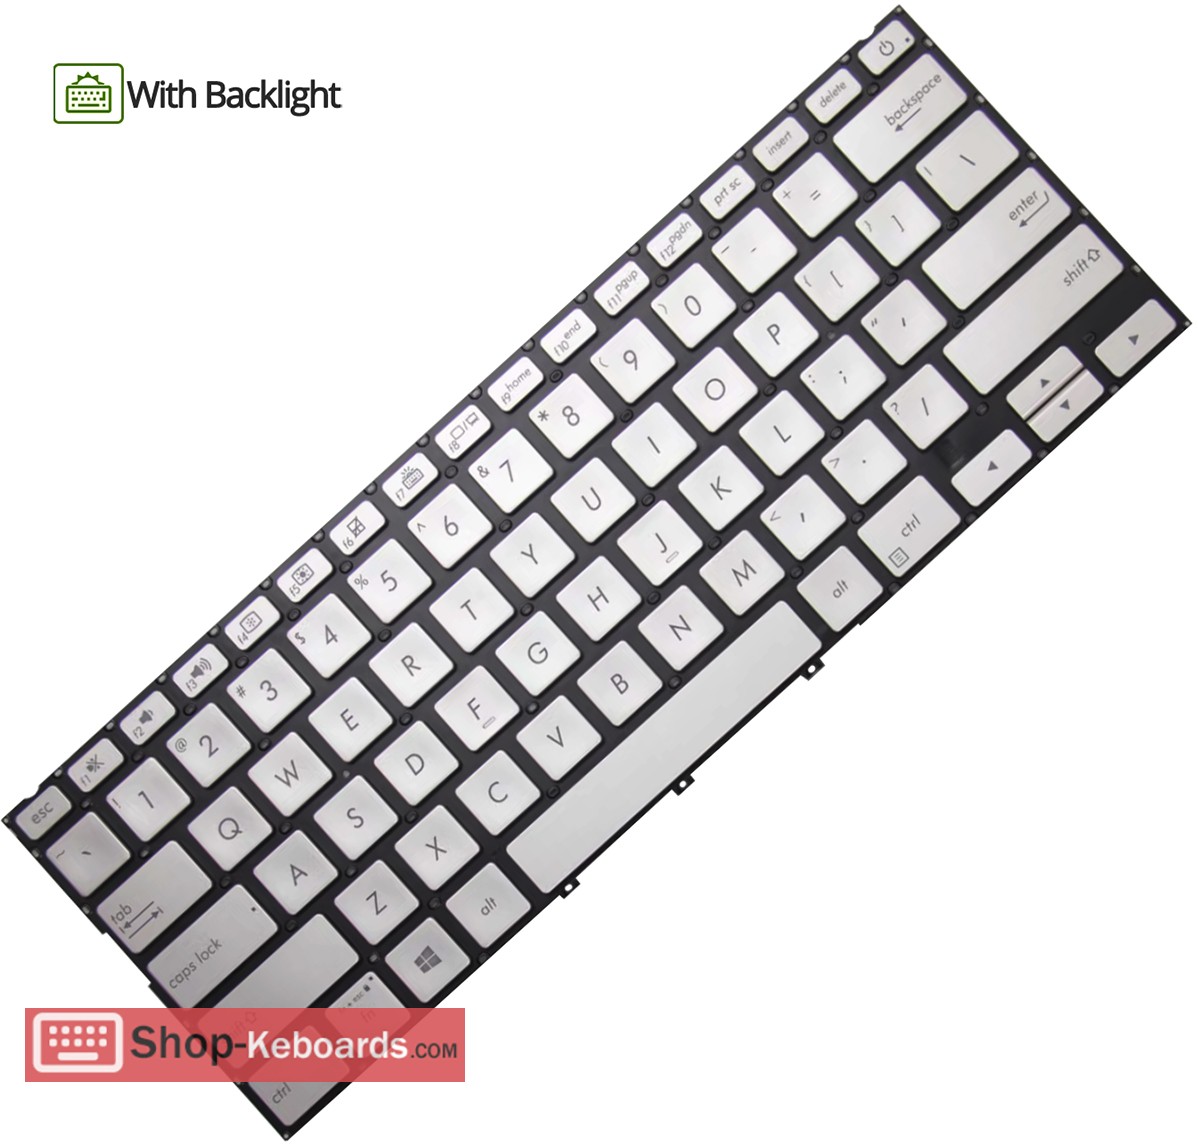 Asus 0KNB0-262GGE00 Keyboard replacement